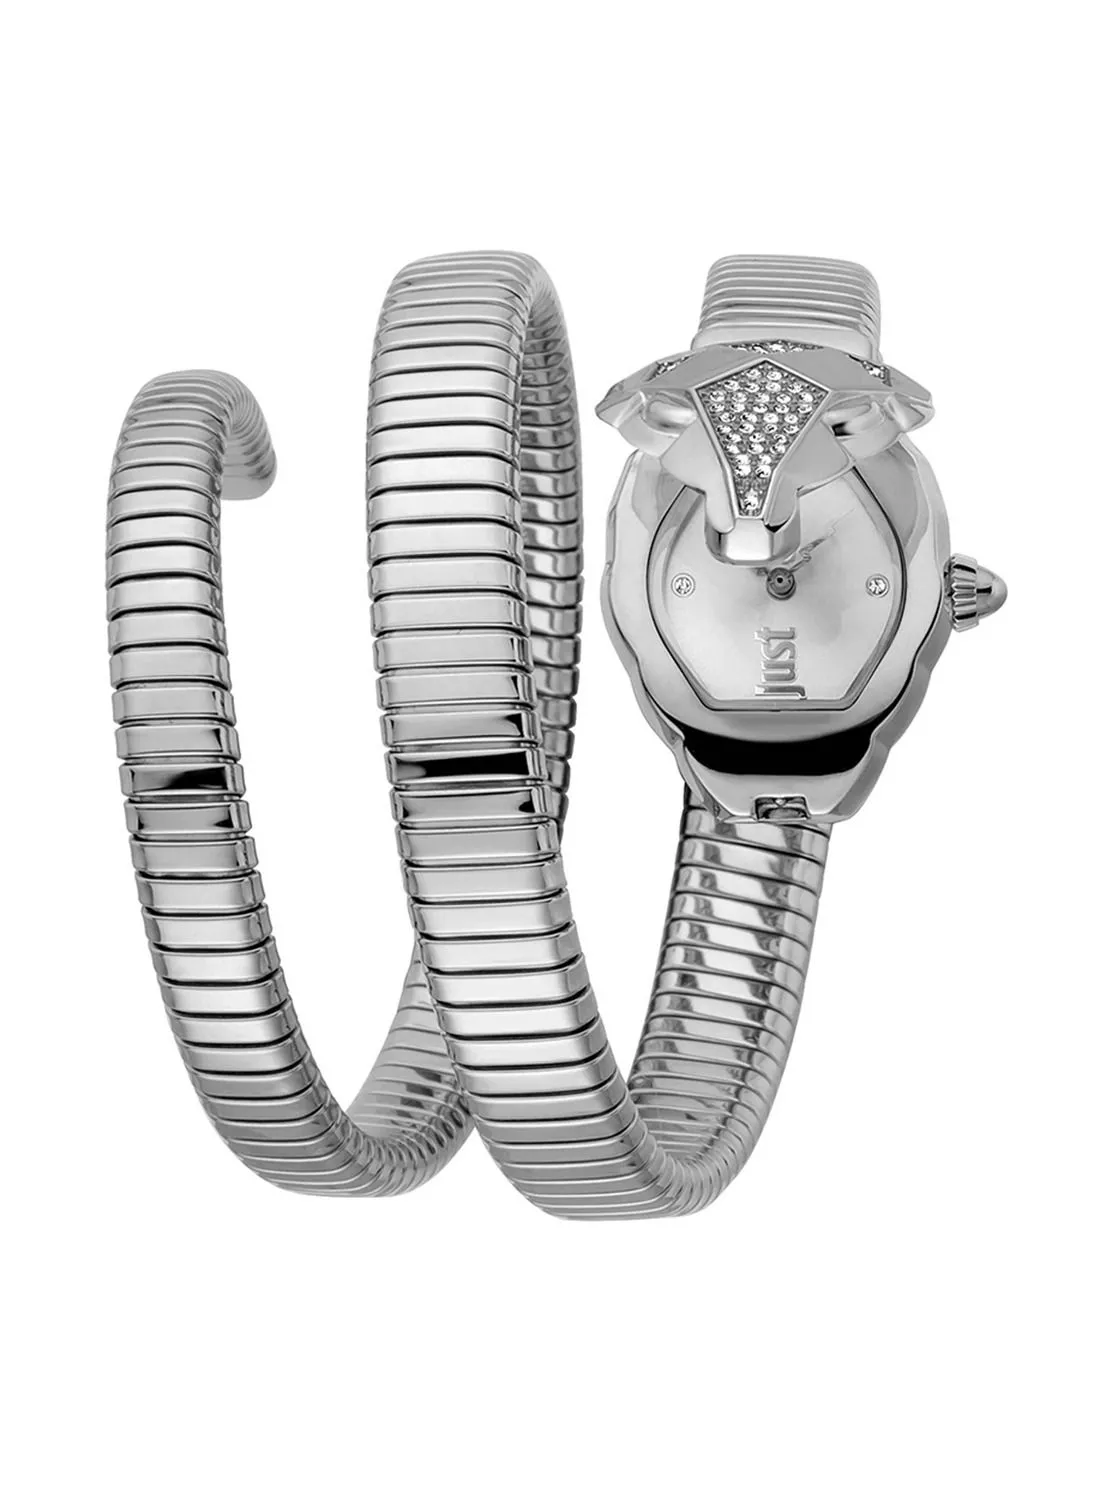 Justcavalli Stainless Steel Analog Hexagon Waterproof Wrist Watch JC1L073M0015